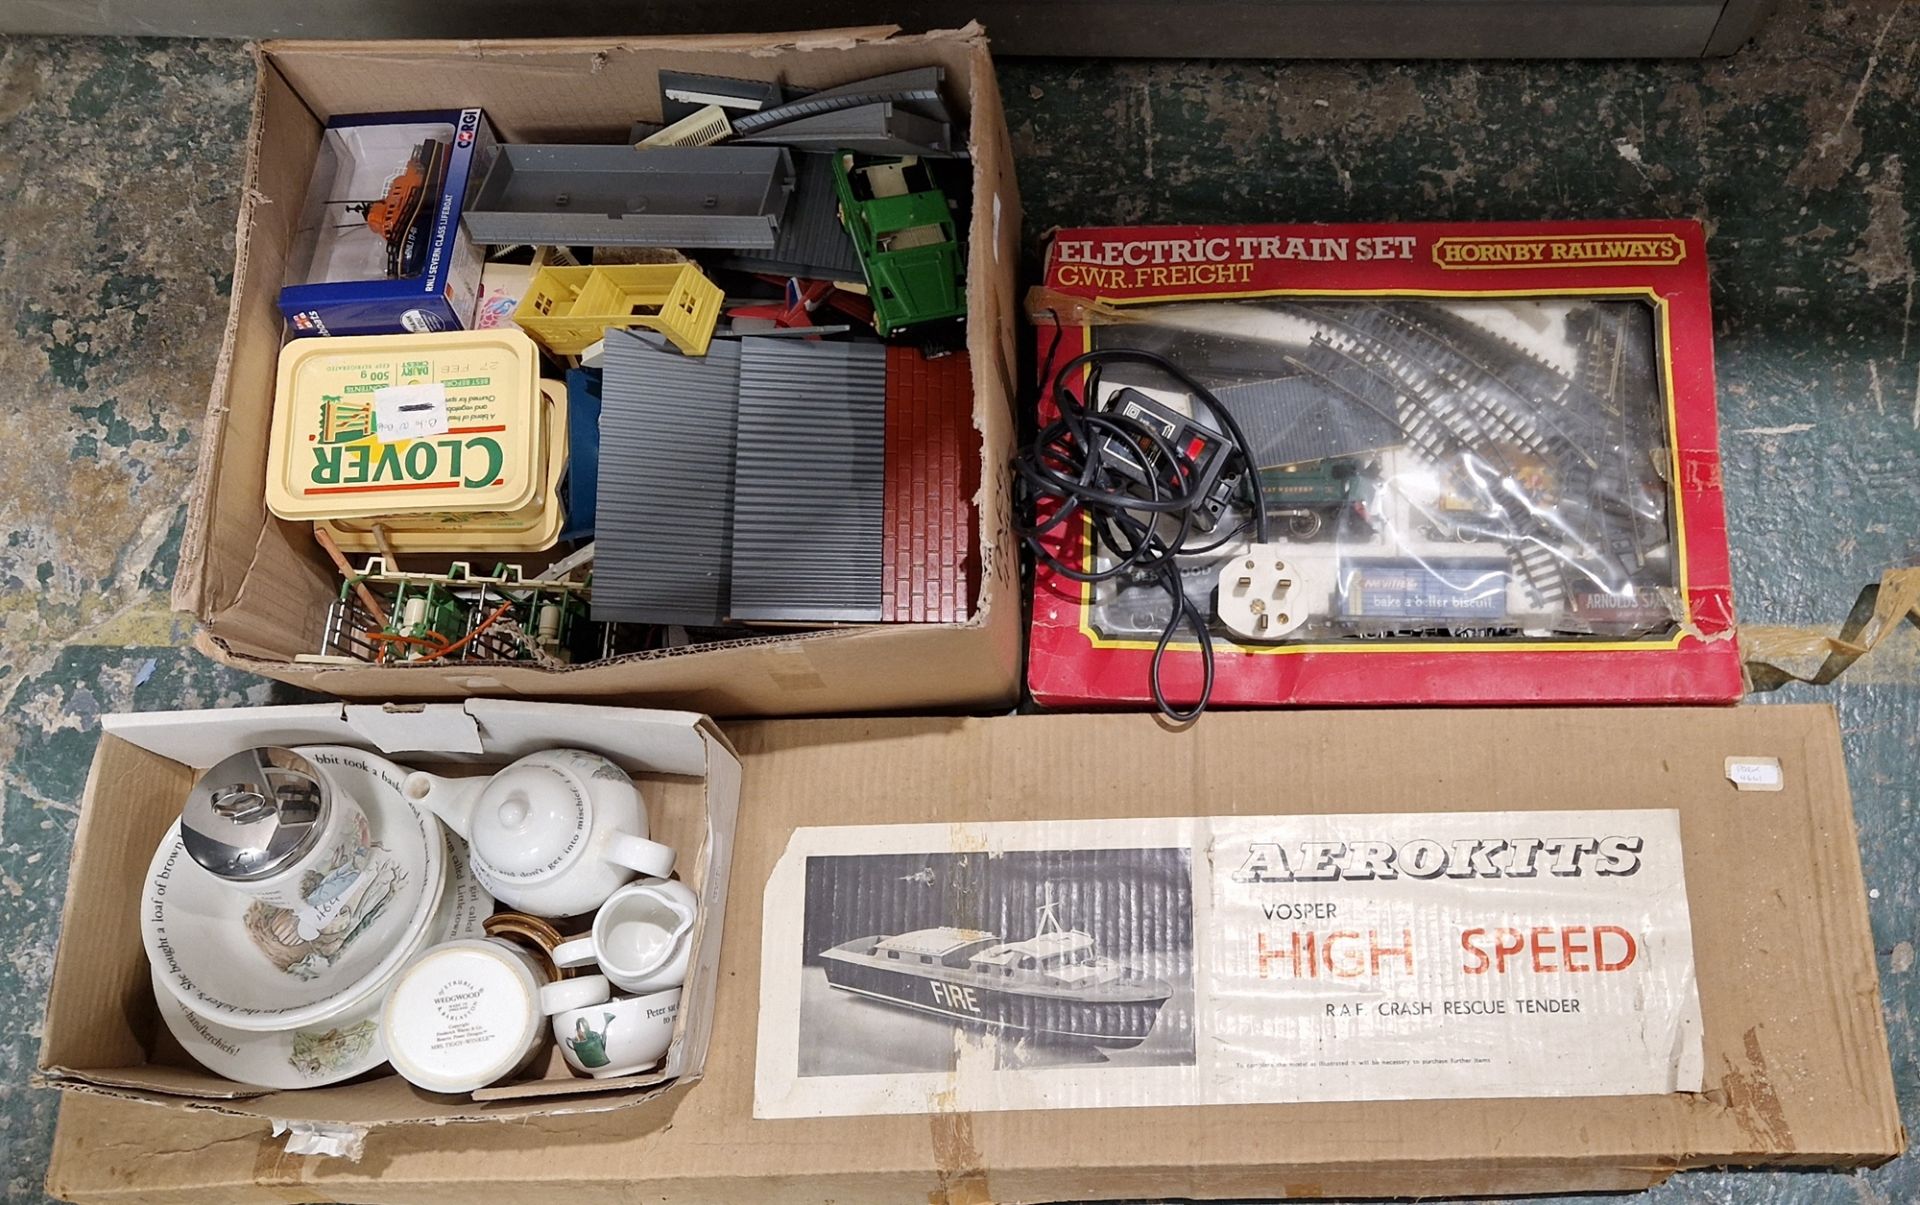 An Aerokits kit Vosper High Speed RAF Crash Rescue Tender in original box and original instruction